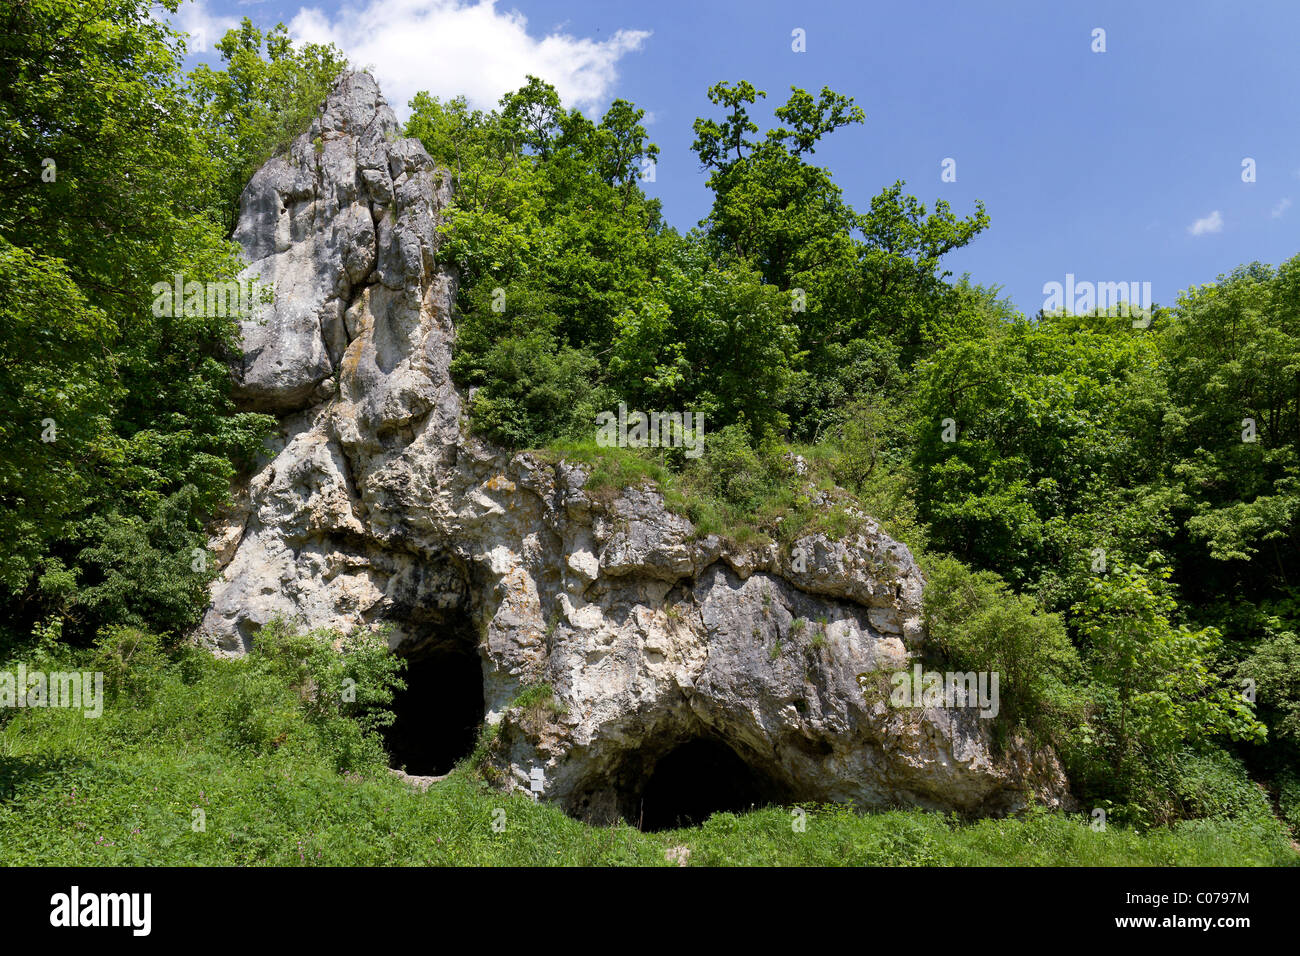 Fohlenhaus grotta, Lonetal Valley, vicino Bernstadt, Alb-Donau-Kreis distretto, Baden-Wuerttemberg, sud della Germania Germania, Europa Foto Stock